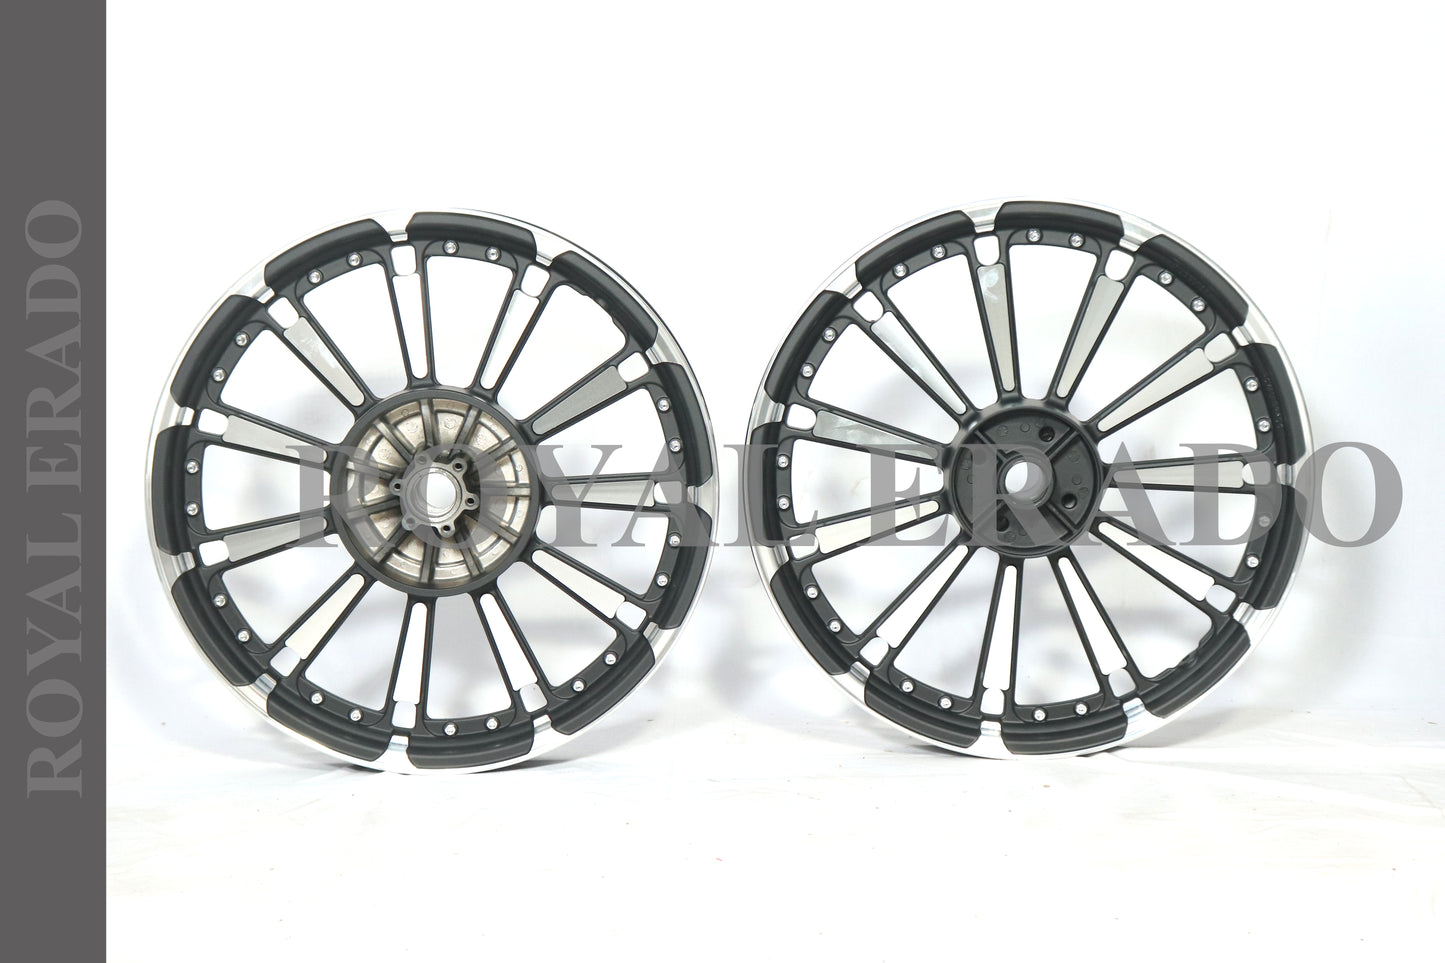 11 SPOKE RAJPUTANA DESIGN alloy wheel for thunderbird and classic double disc